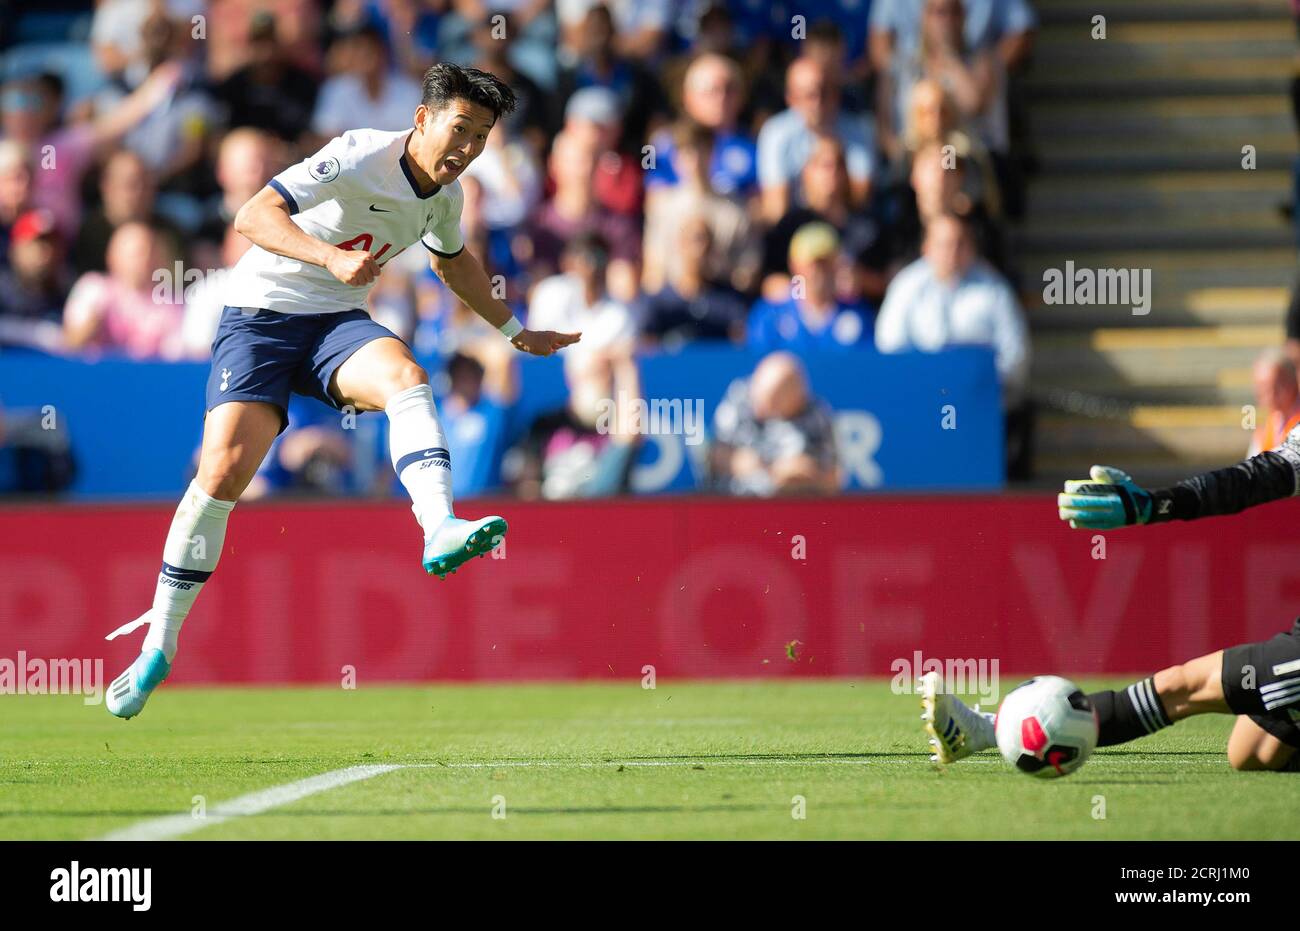 Tottenham Hotspurs' Son Heung-min shoots just wide PHOTO CREDIT : © MARK PAIN / ALAMY STOCK PHOTO Stock Photo